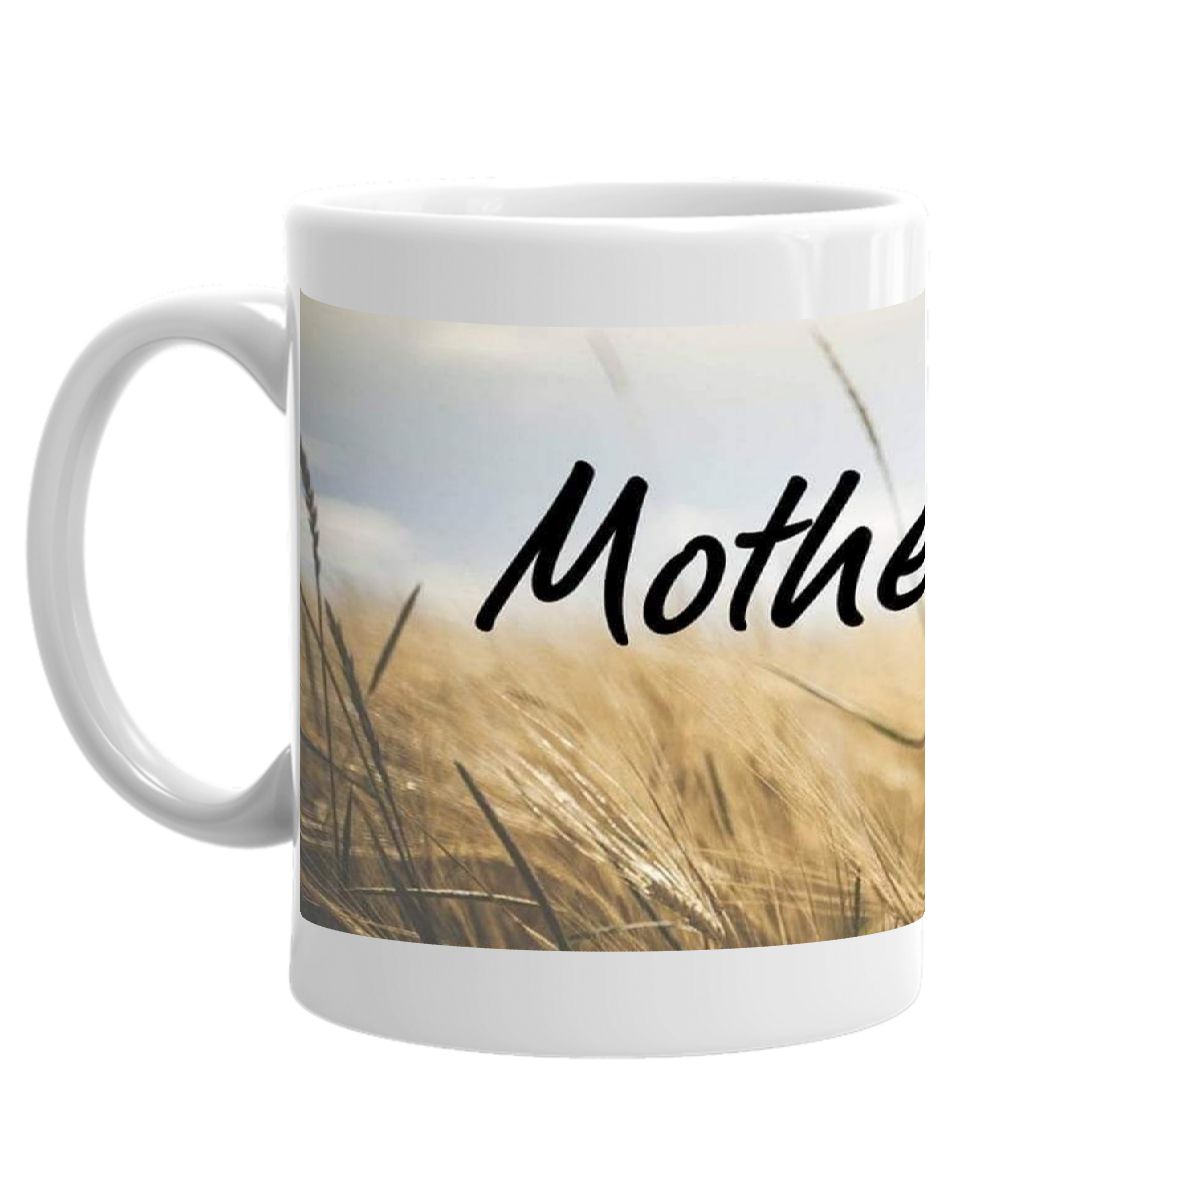 Mother of Chickens mug